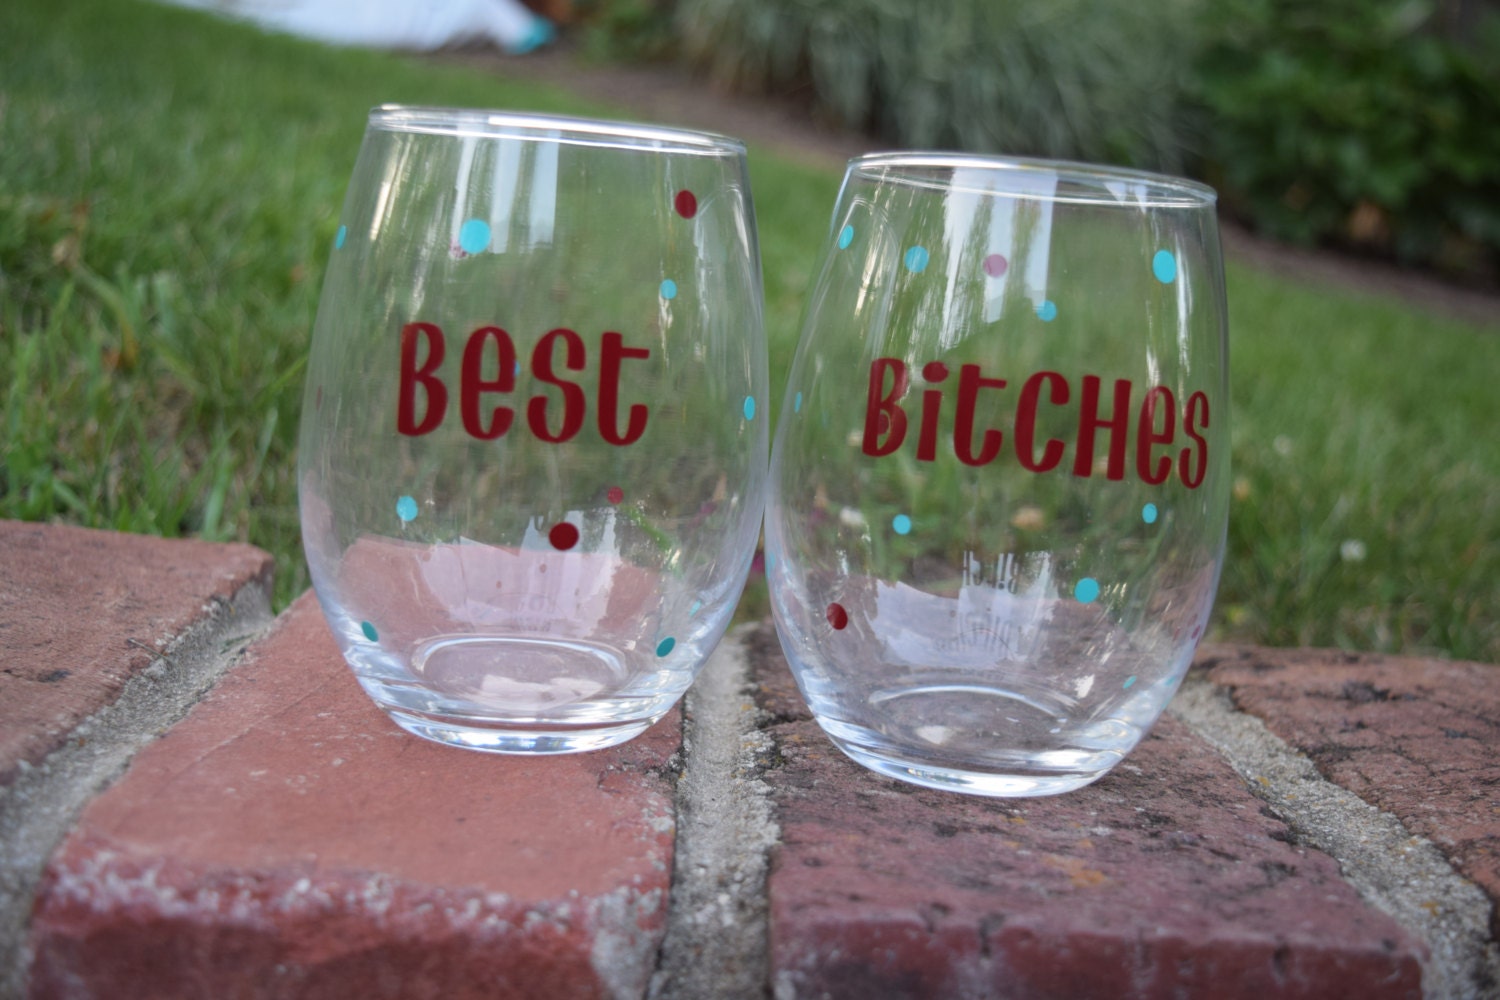 Kitchen Bitches - Starter Wine Glass Set